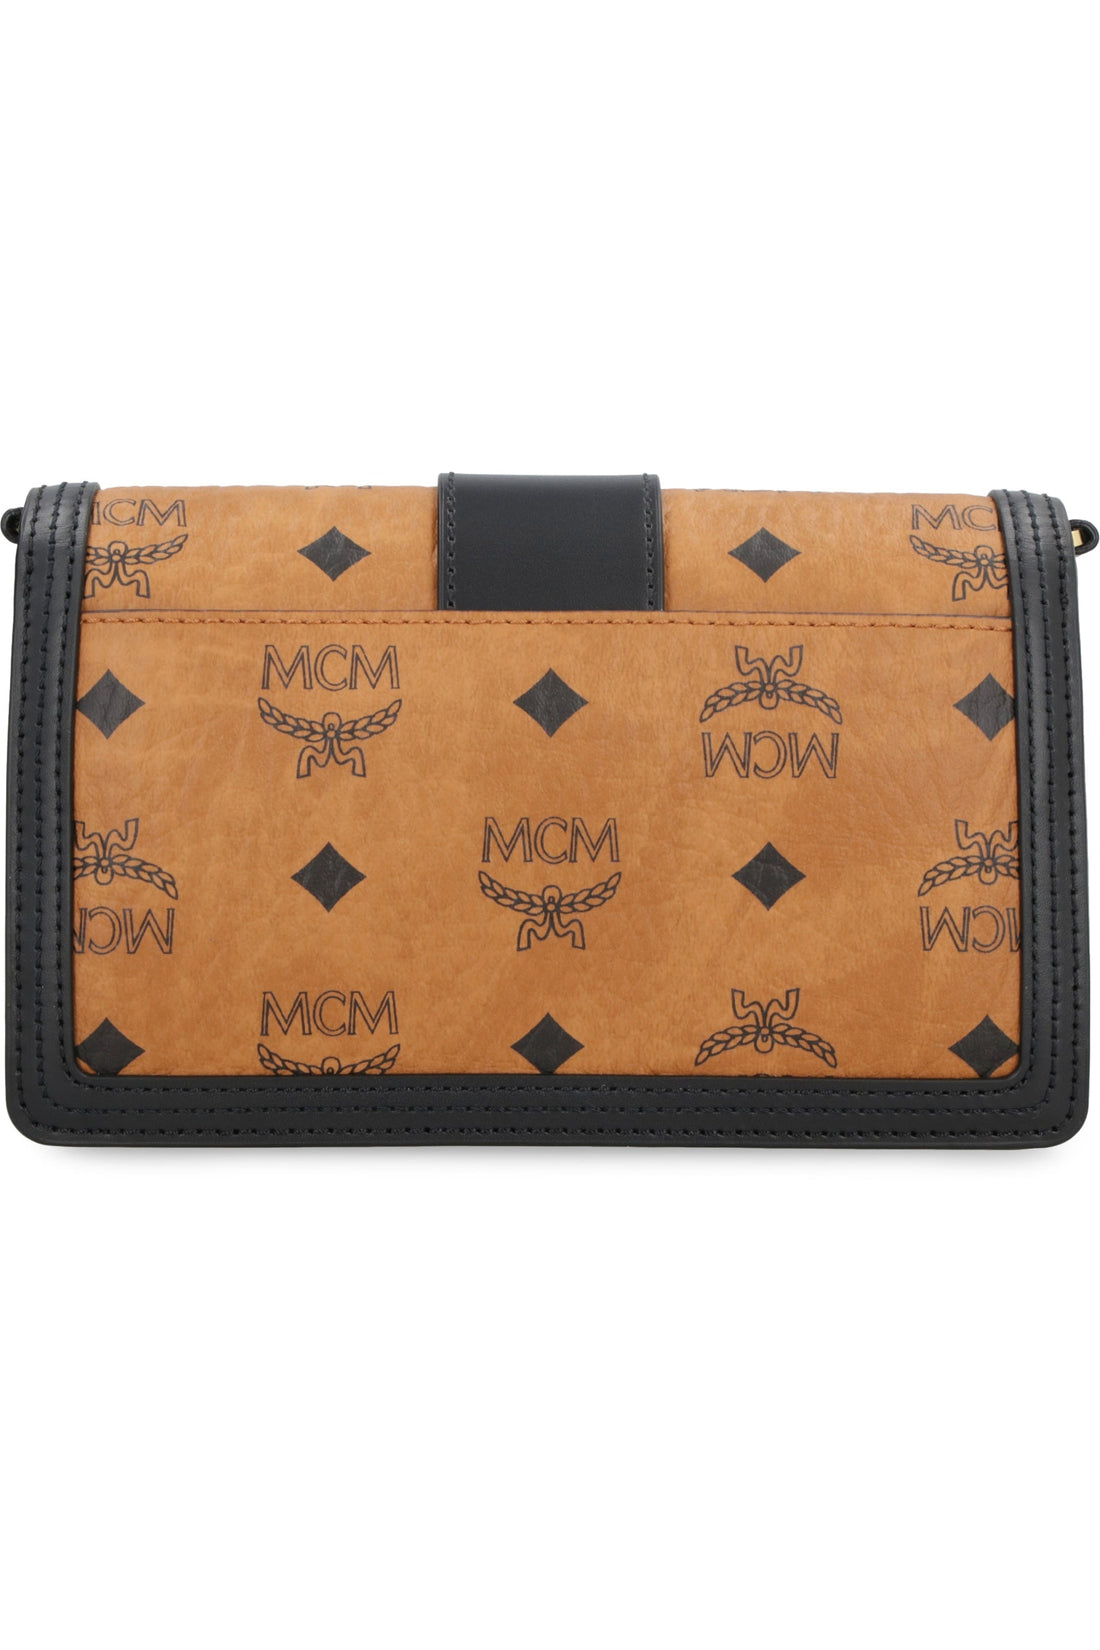 MCM-OUTLET-SALE-Tracy mini crossbodybag-ARCHIVIST